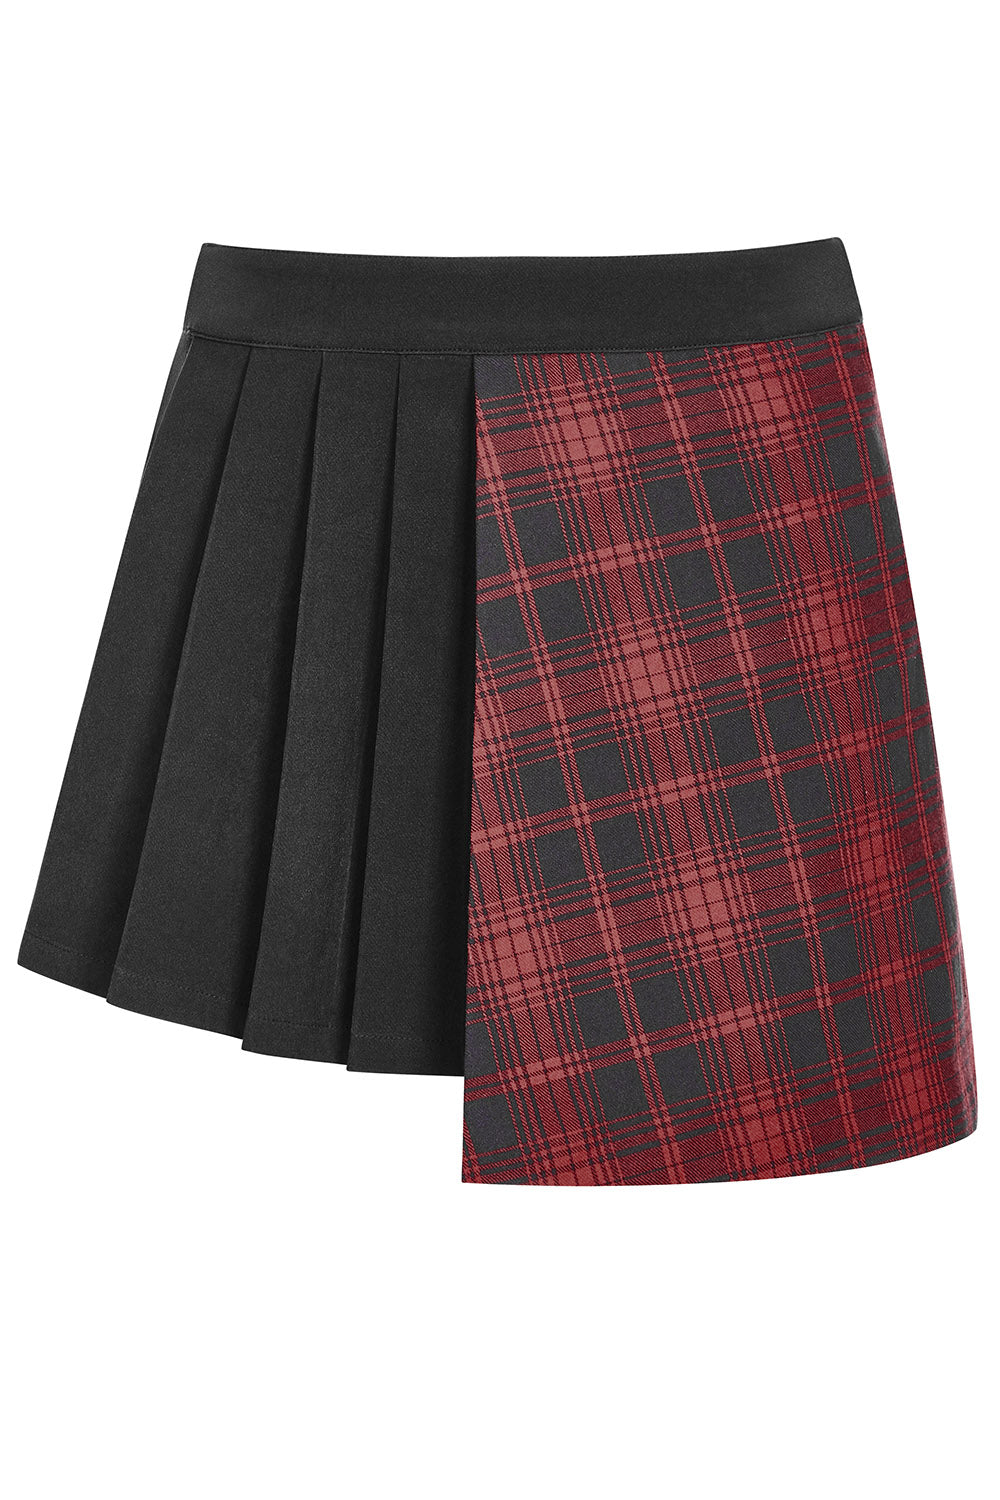 Split Personality Pleated Skirt